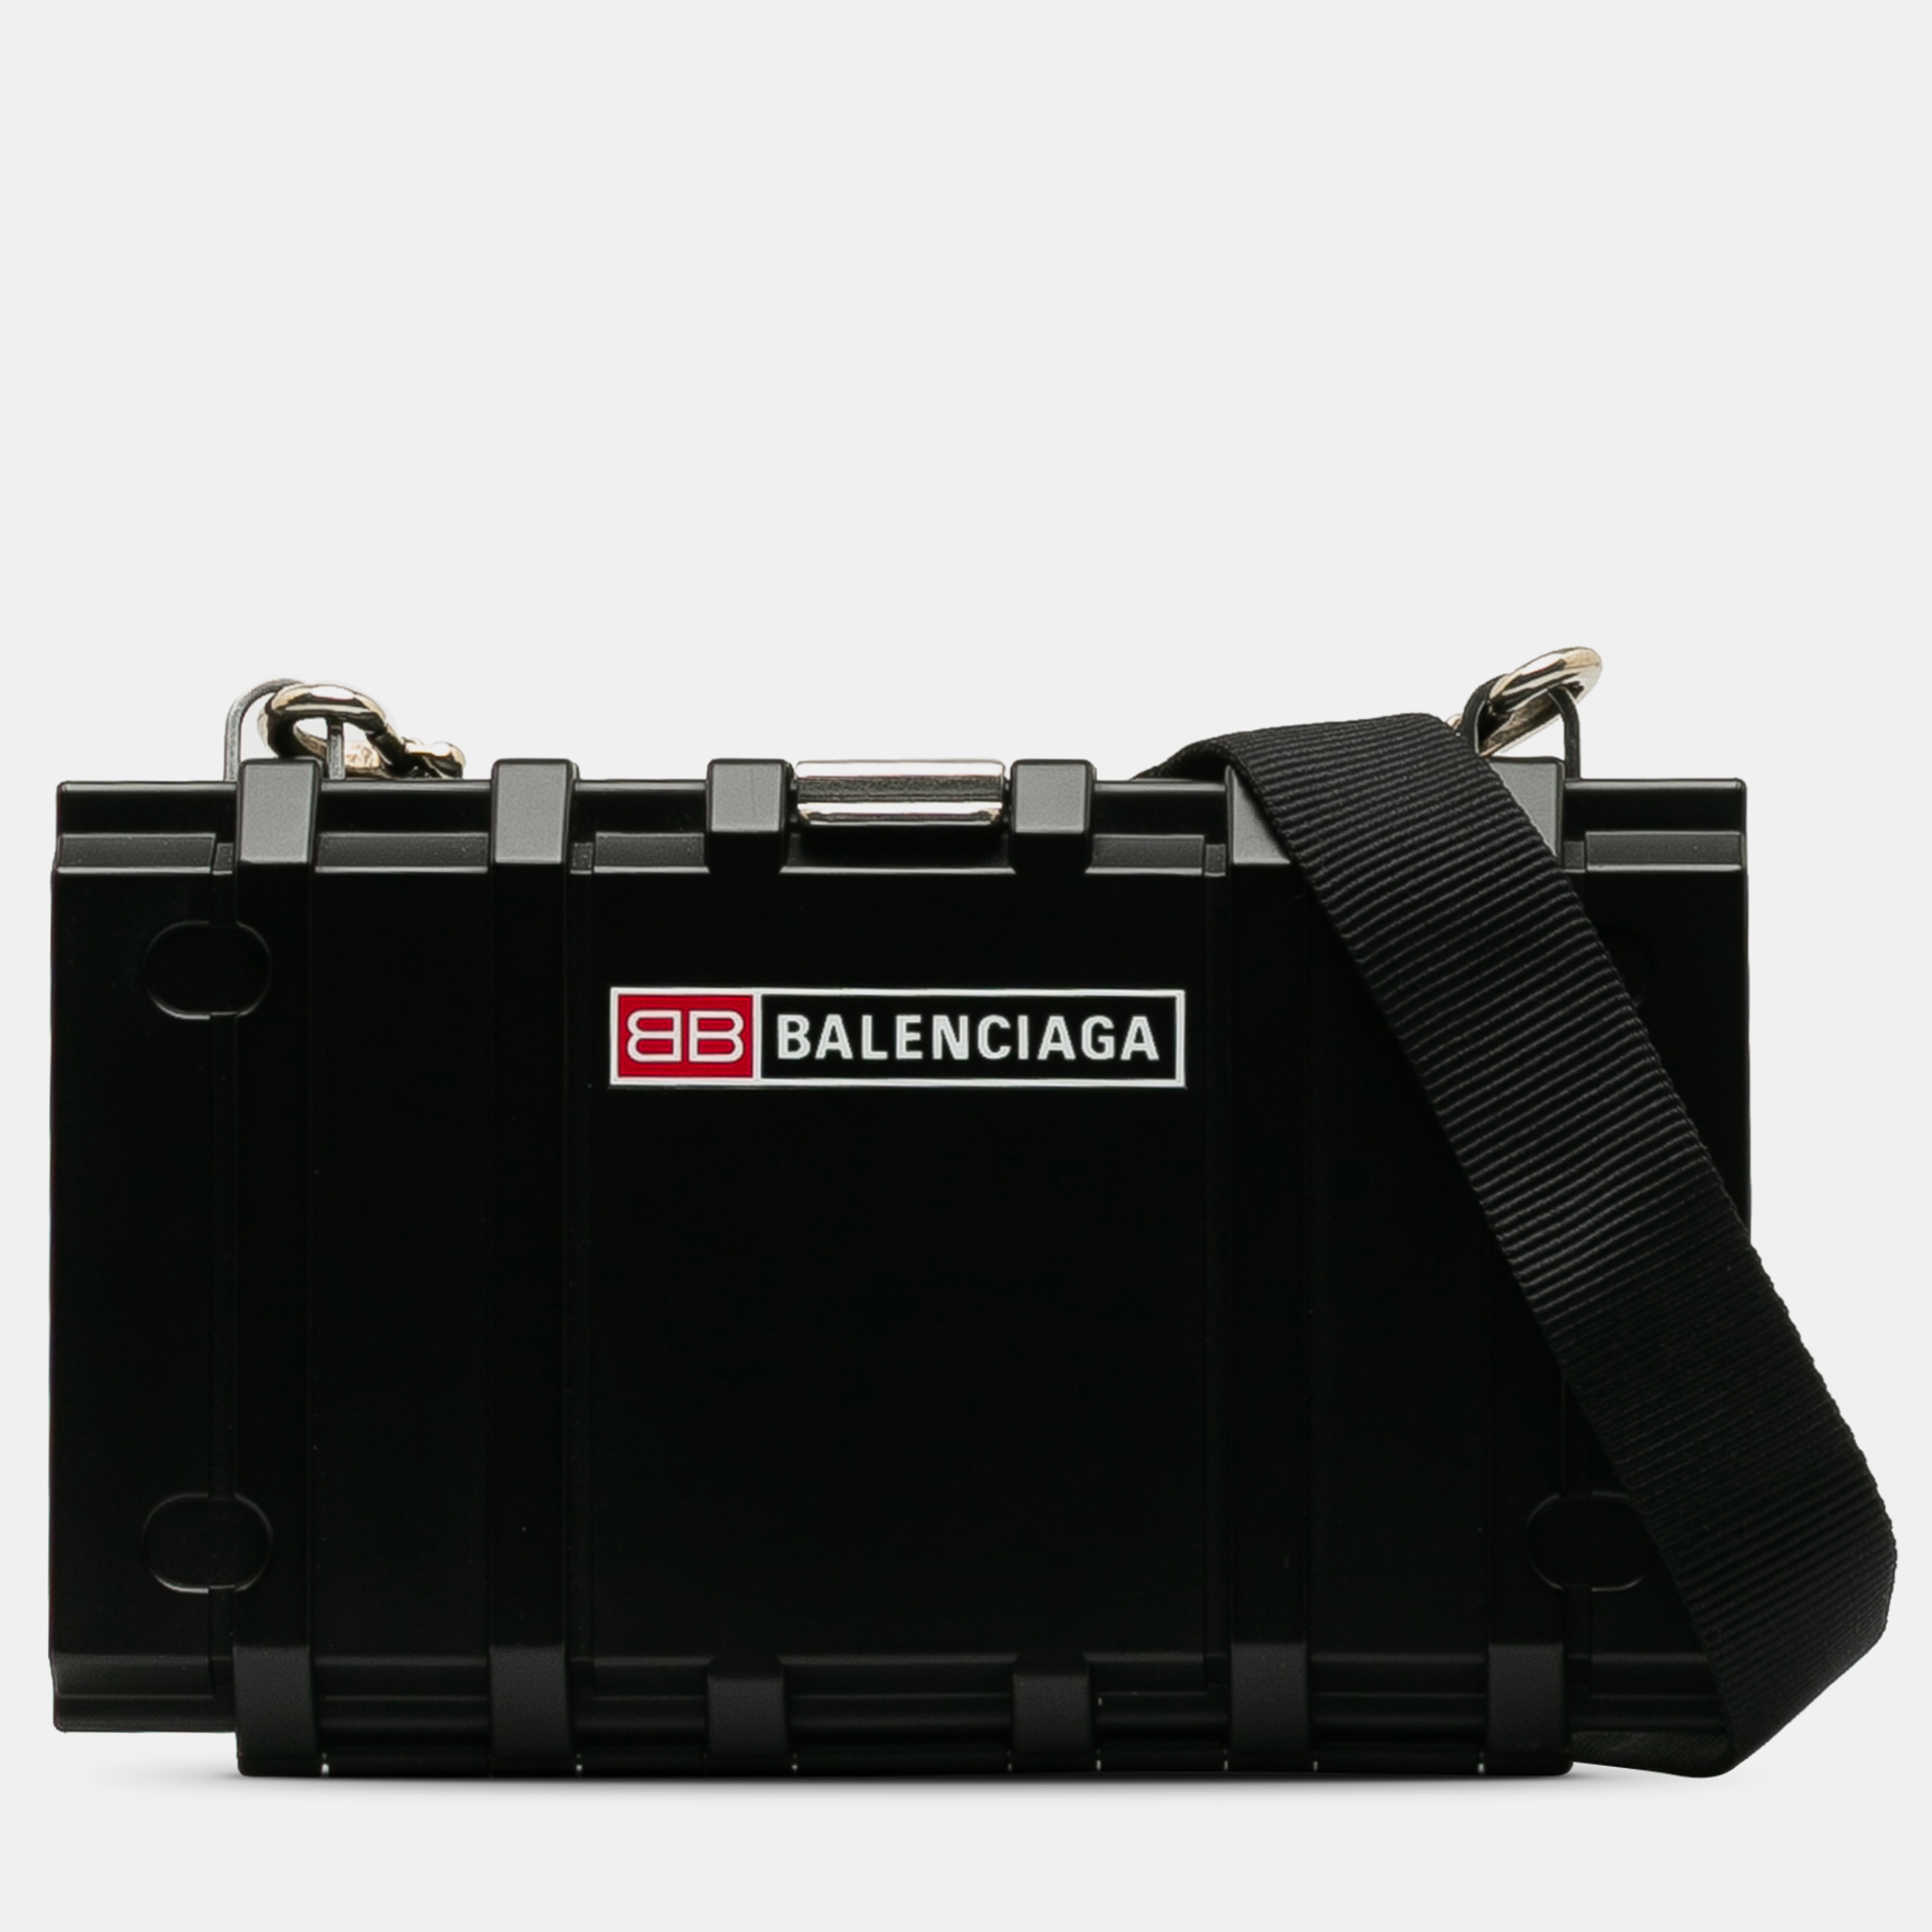 Balenciaga toolbox clutch crossbody bag